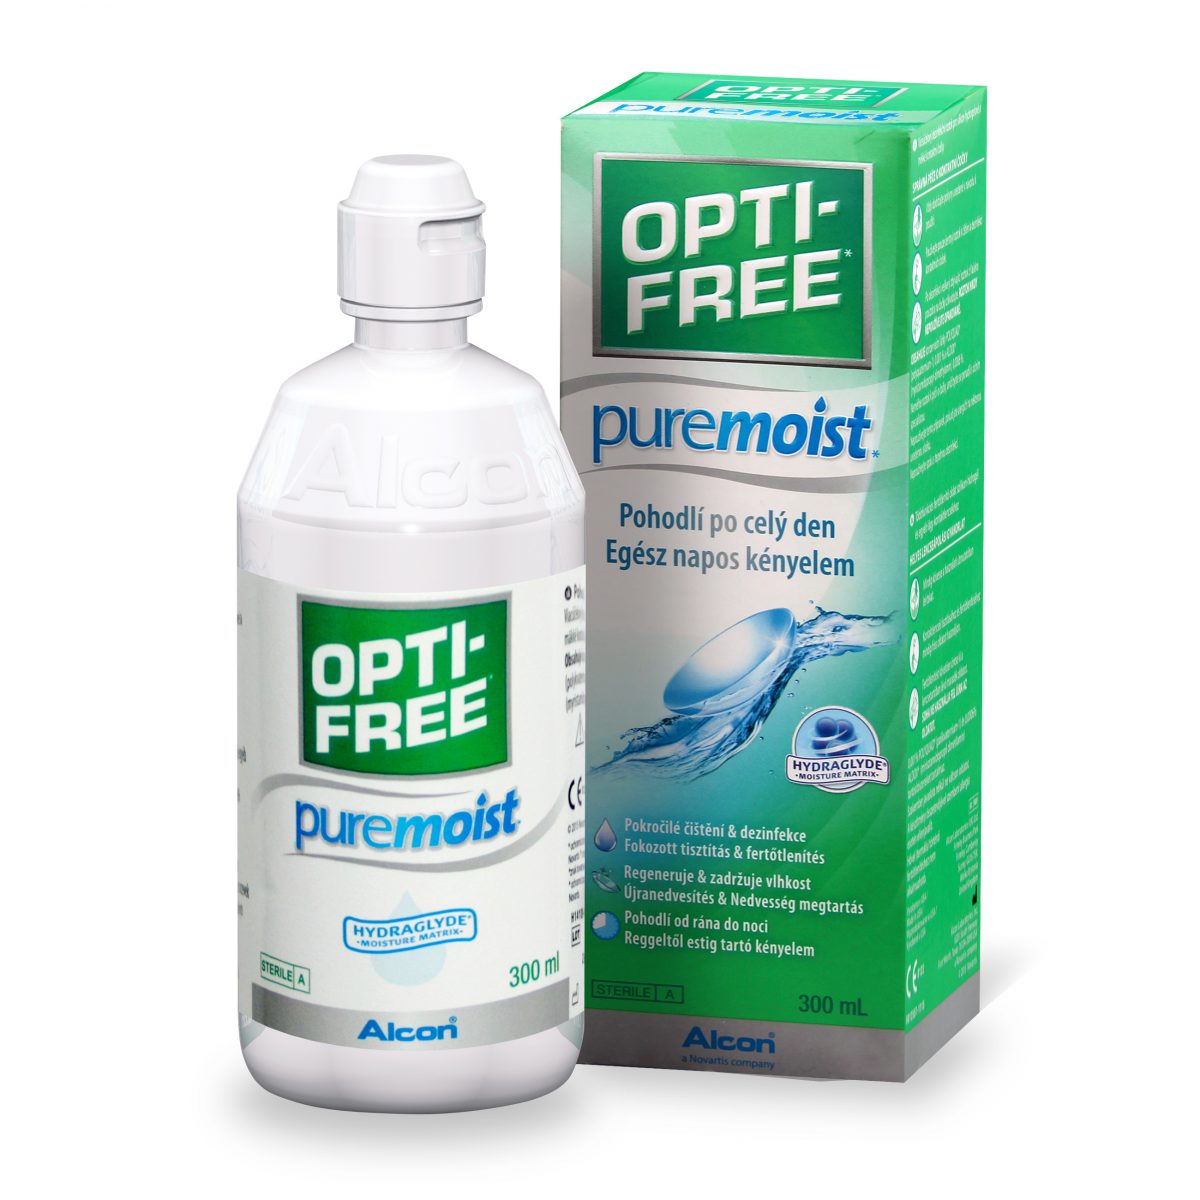 Опти. Opti-free PUREMOIST 300 ml. Opti-free PUREMOIST. Opti free Evermoist 300ml. Физраствор Opti free.